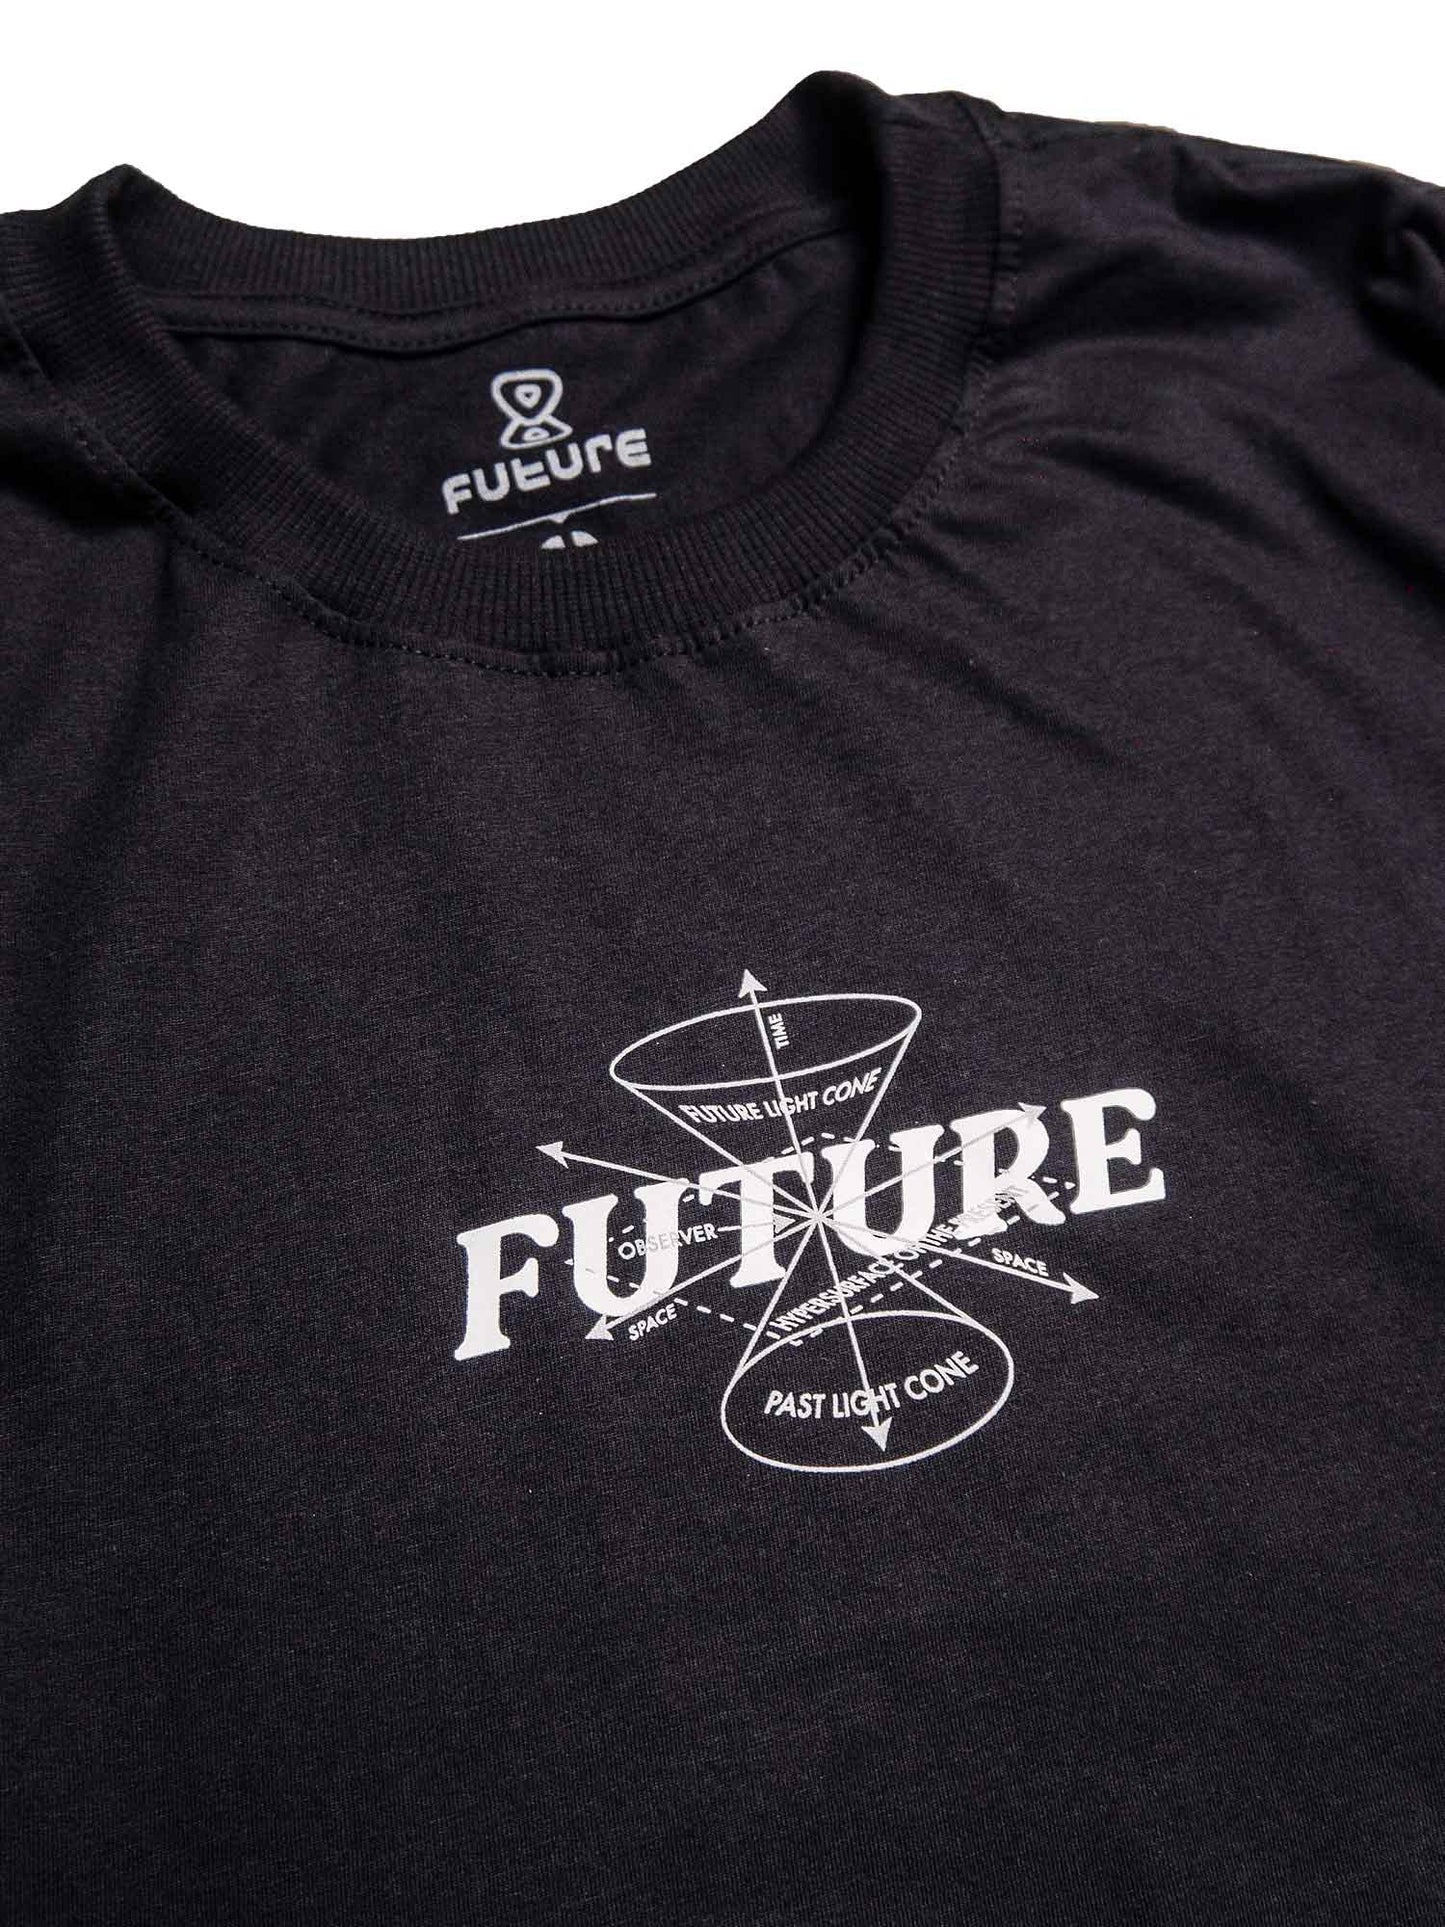 Camiseta-Future-Light-Cone-Preta-Frente-Detalhe